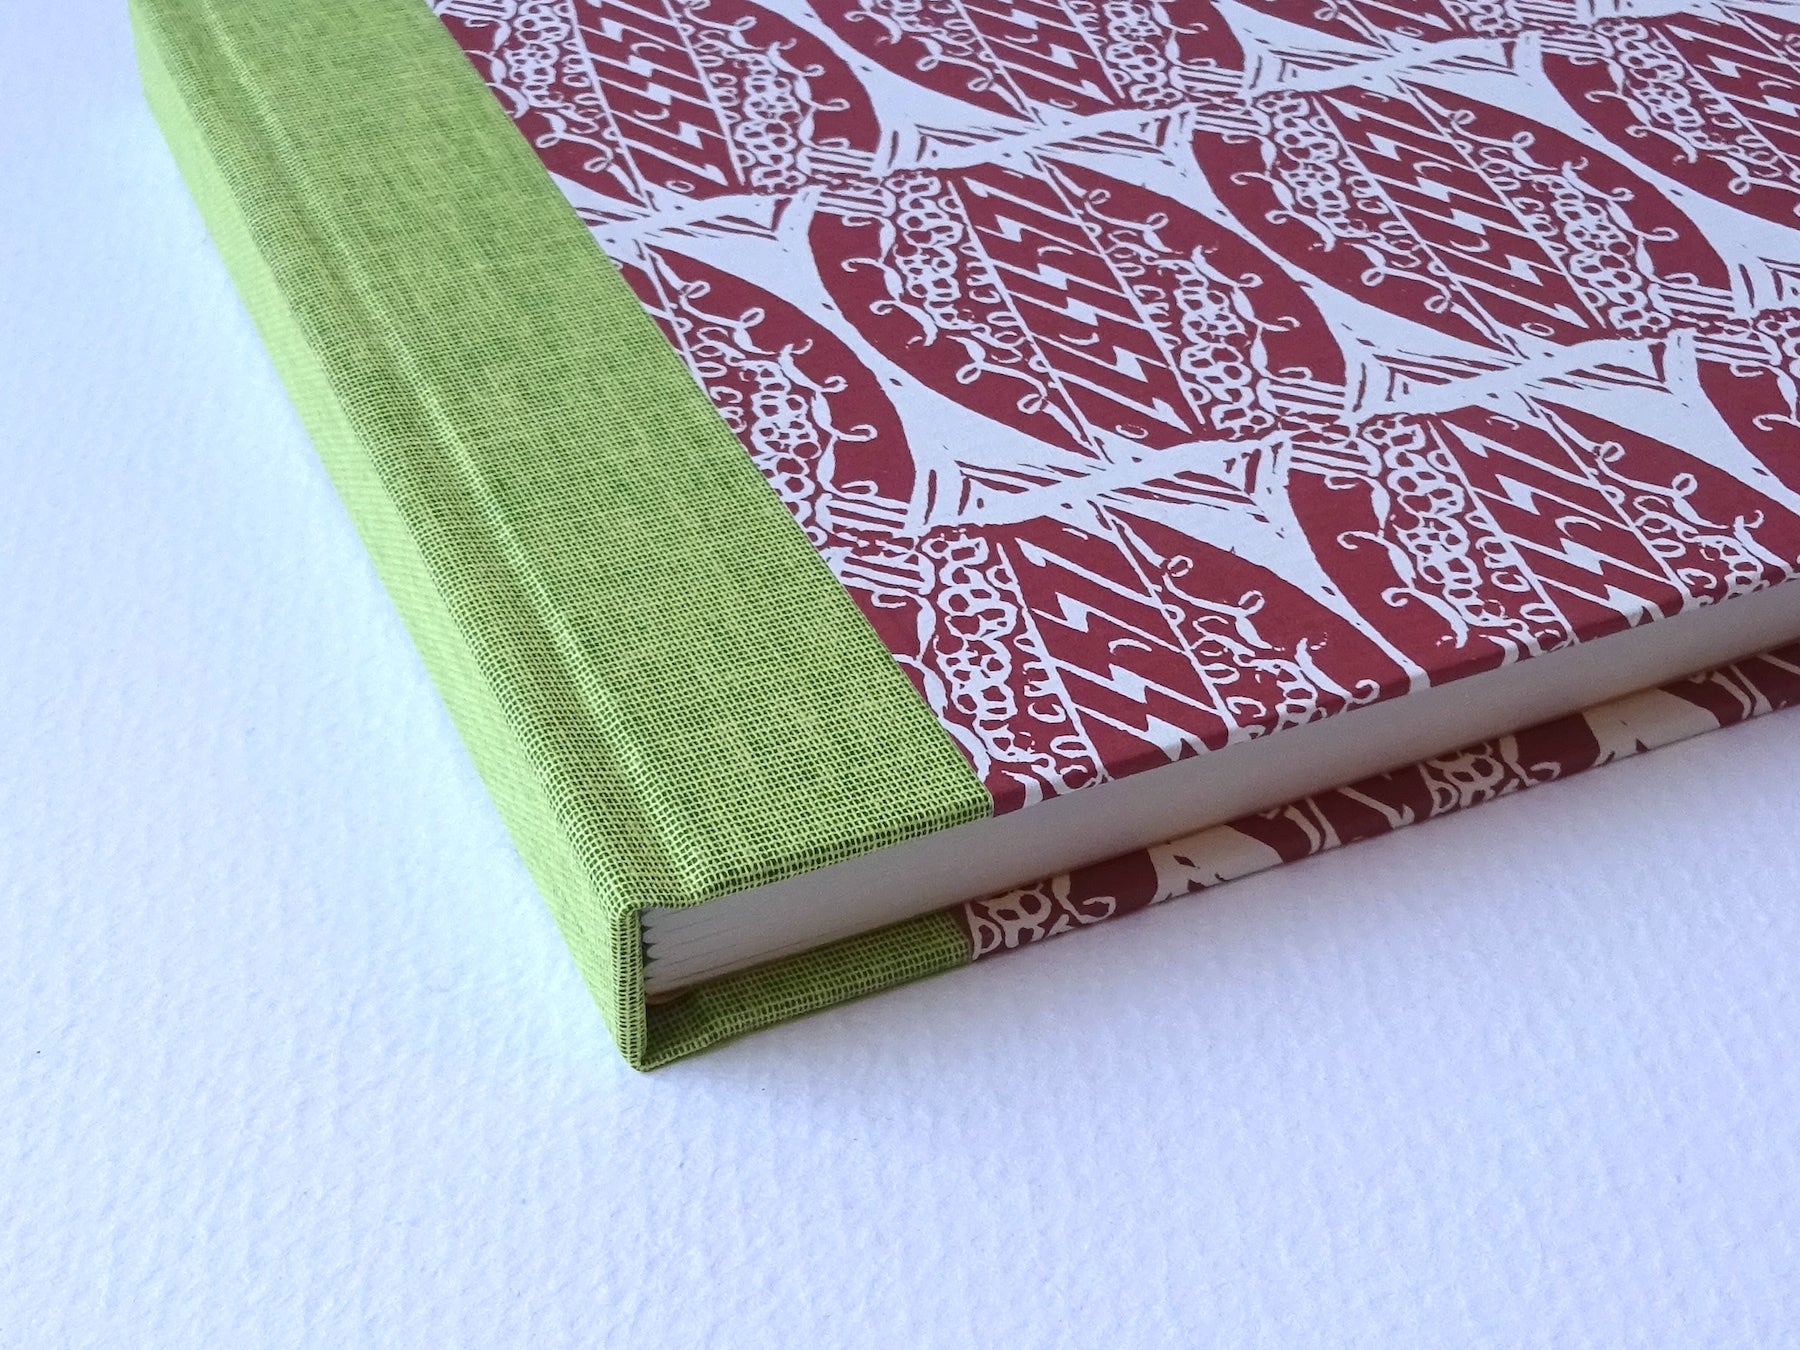 sketchbook with ivory design enid marx pattern paper